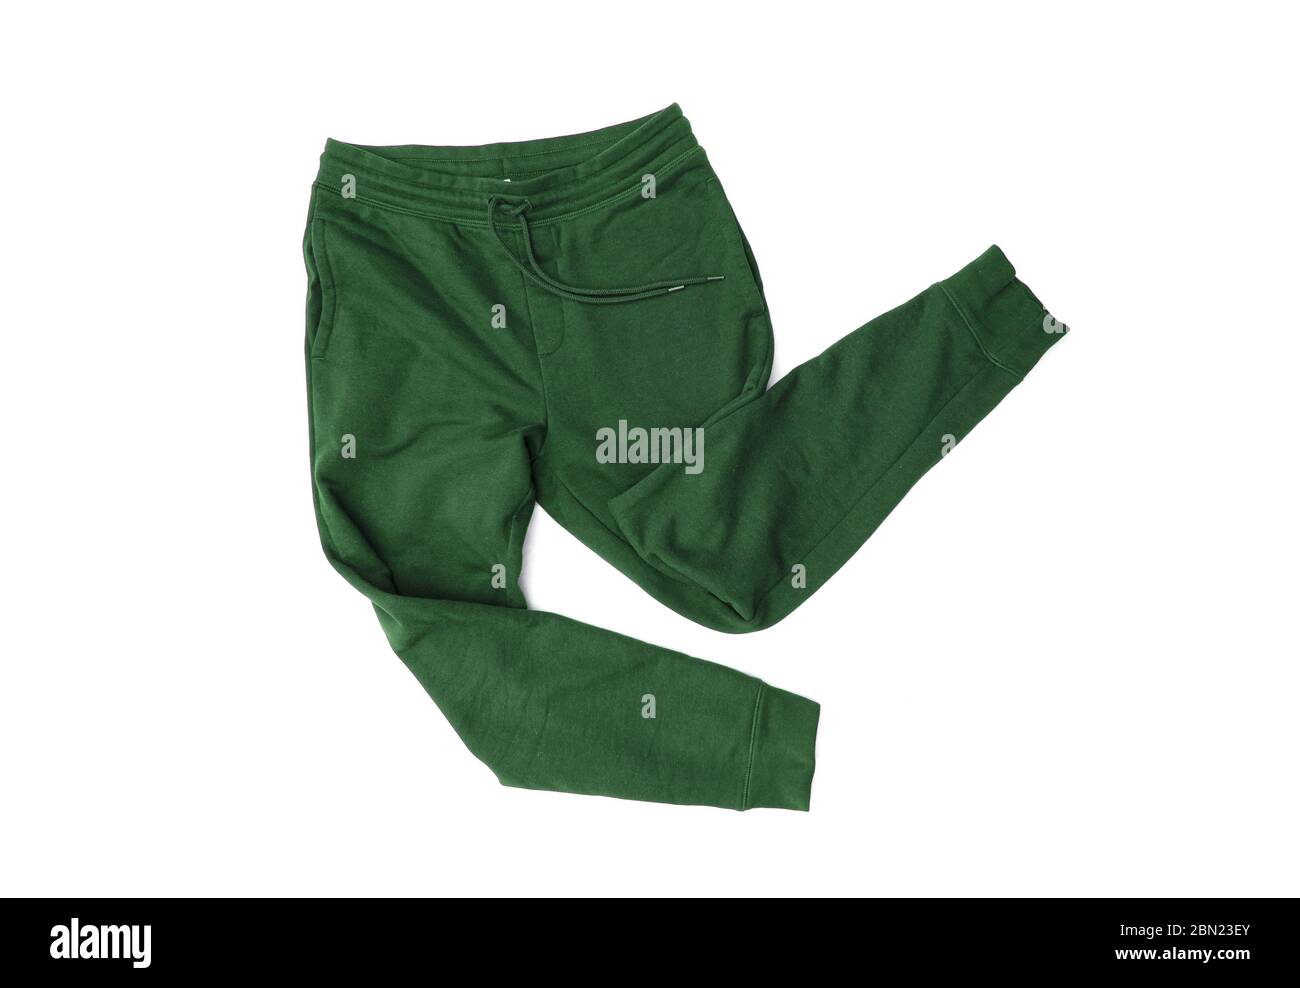 Pantaloni sportivi verdi, pantaloni da jogging, da uomo isolati su sfondo bianco Foto Stock